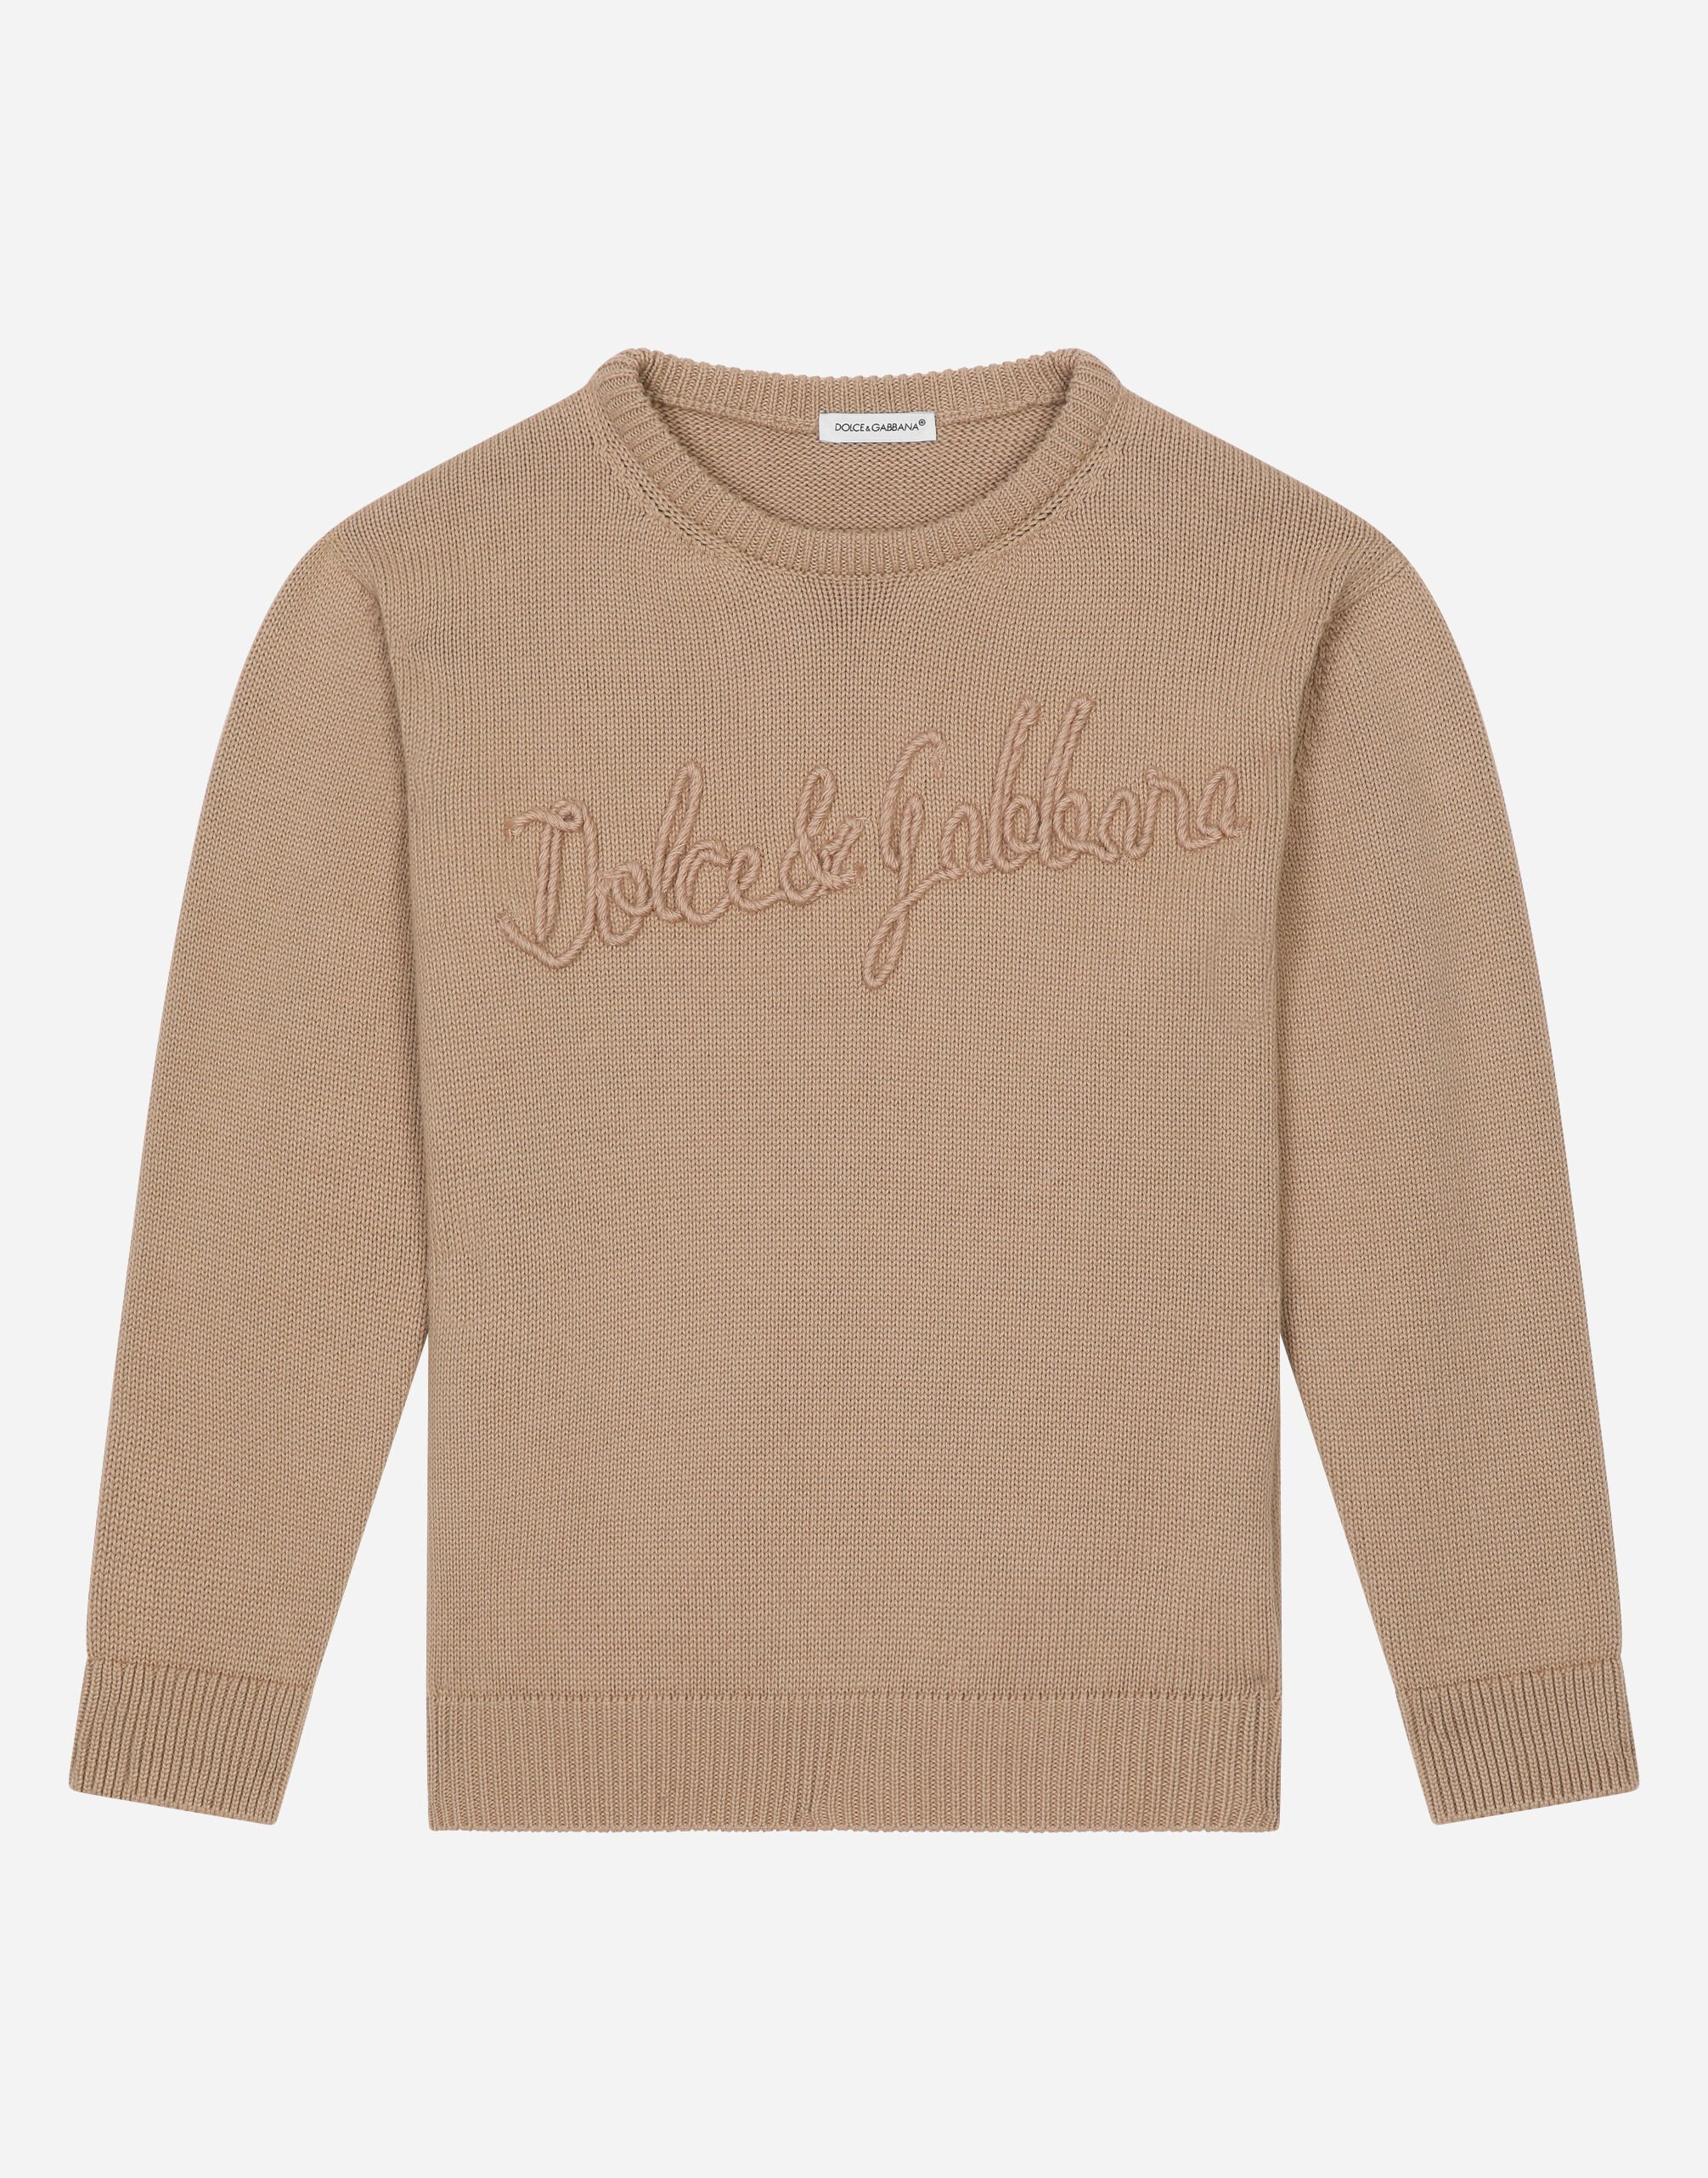 Dolce & Gabbana Pullover in cotone con logo Dolce&Gabbana Beige L4KWE2JBCE0